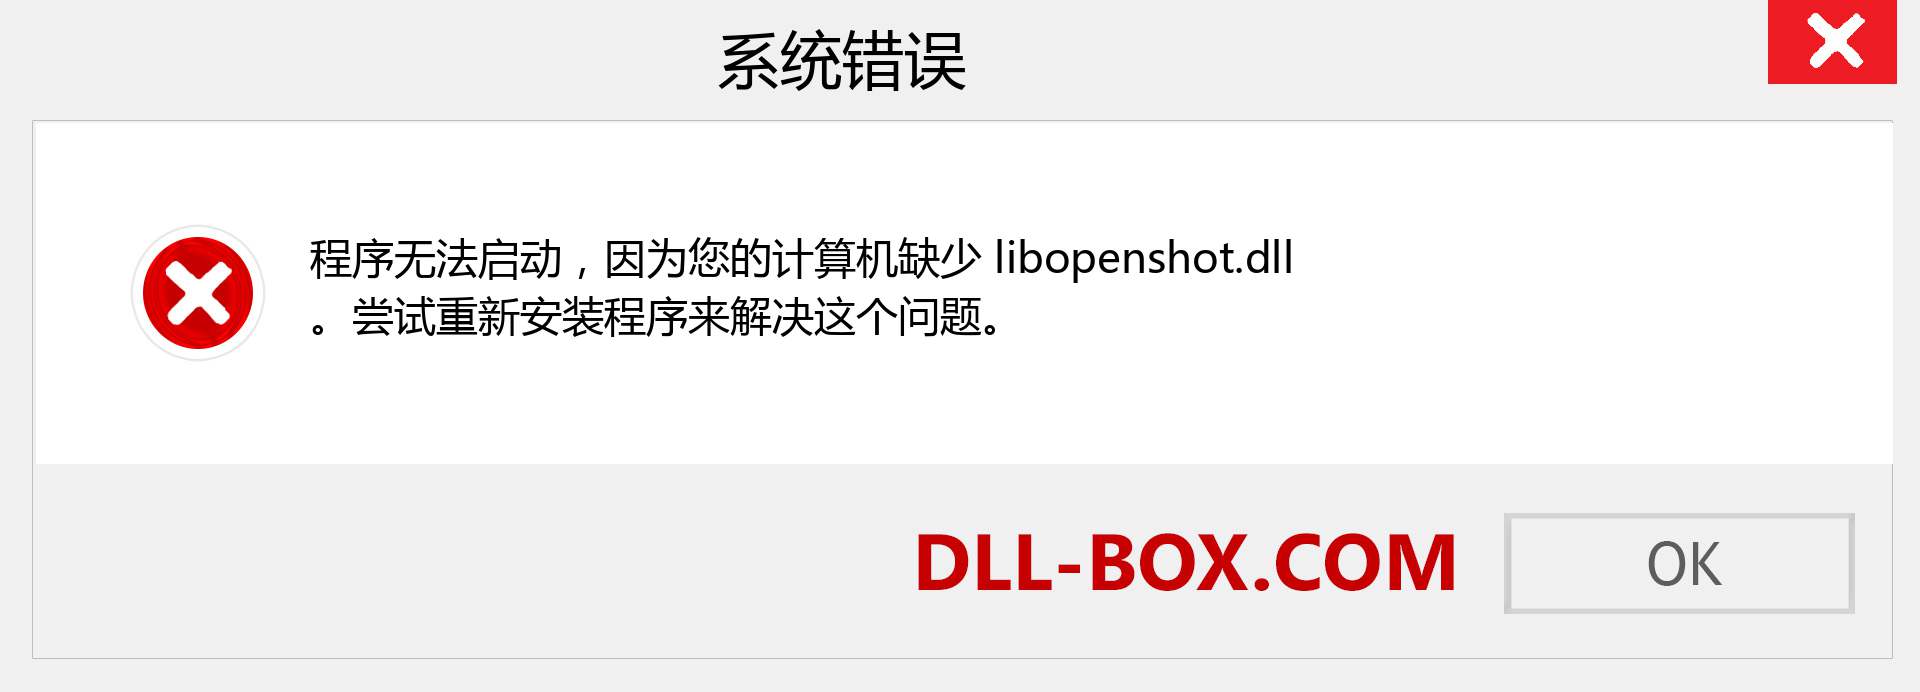 libopenshot.dll 文件丢失？。 适用于 Windows 7、8、10 的下载 - 修复 Windows、照片、图像上的 libopenshot dll 丢失错误